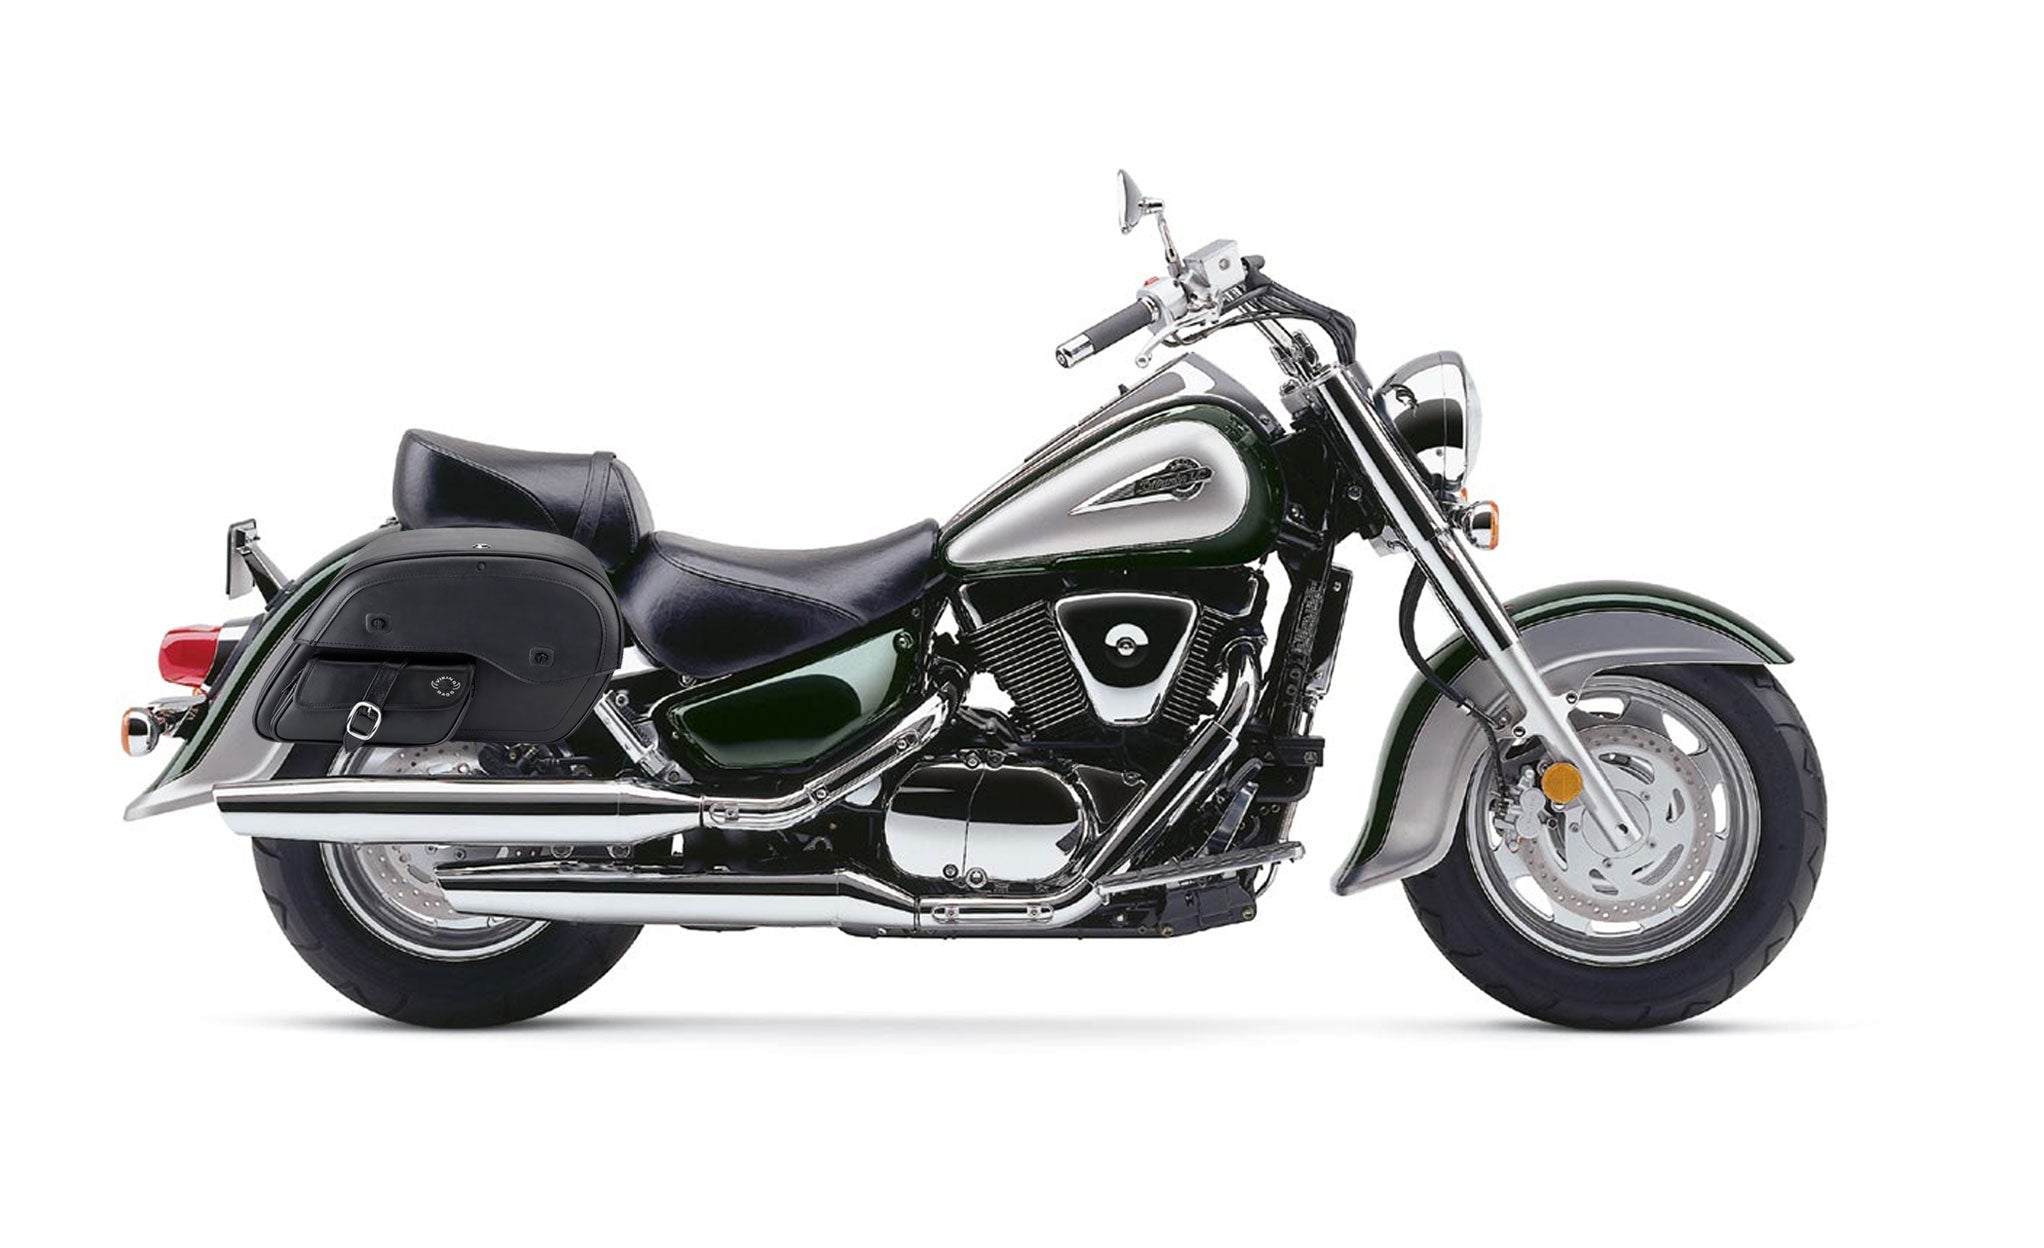 Viking Essential Side Pocket Large Suzuki Intruder 1500 Vl1500 Leather Motorcycle Saddlebags on Bike Photo @expand